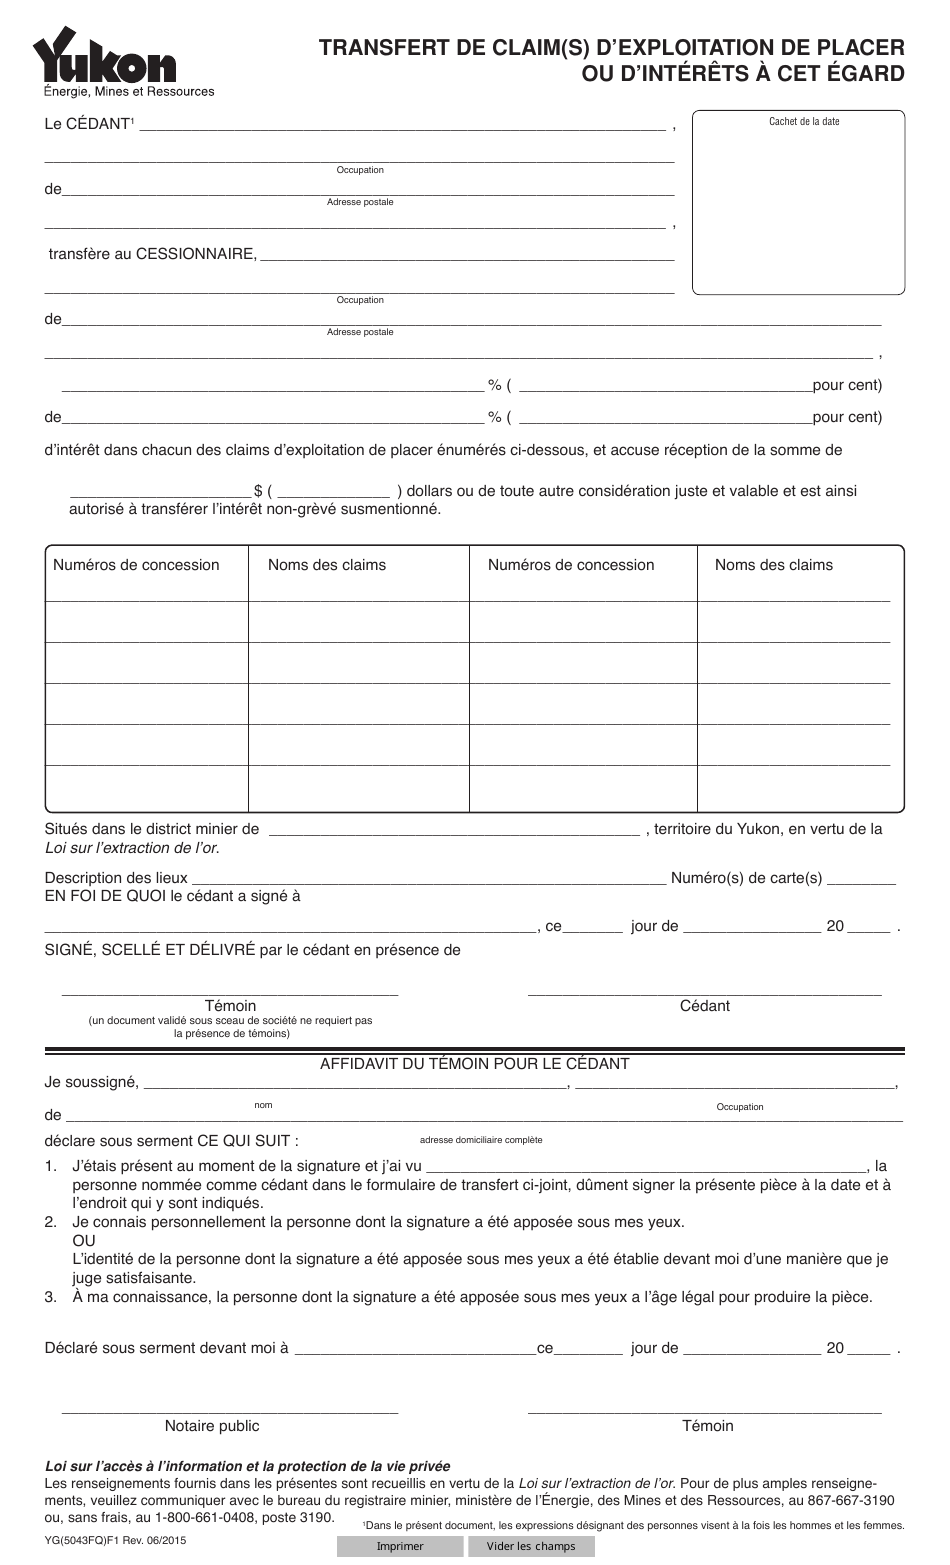 Forme YG5043 Transfert De Claim(S) Dexploitation De Placer Ou Dinterets a Cet Egard - Yukon, Canada (French), Page 1